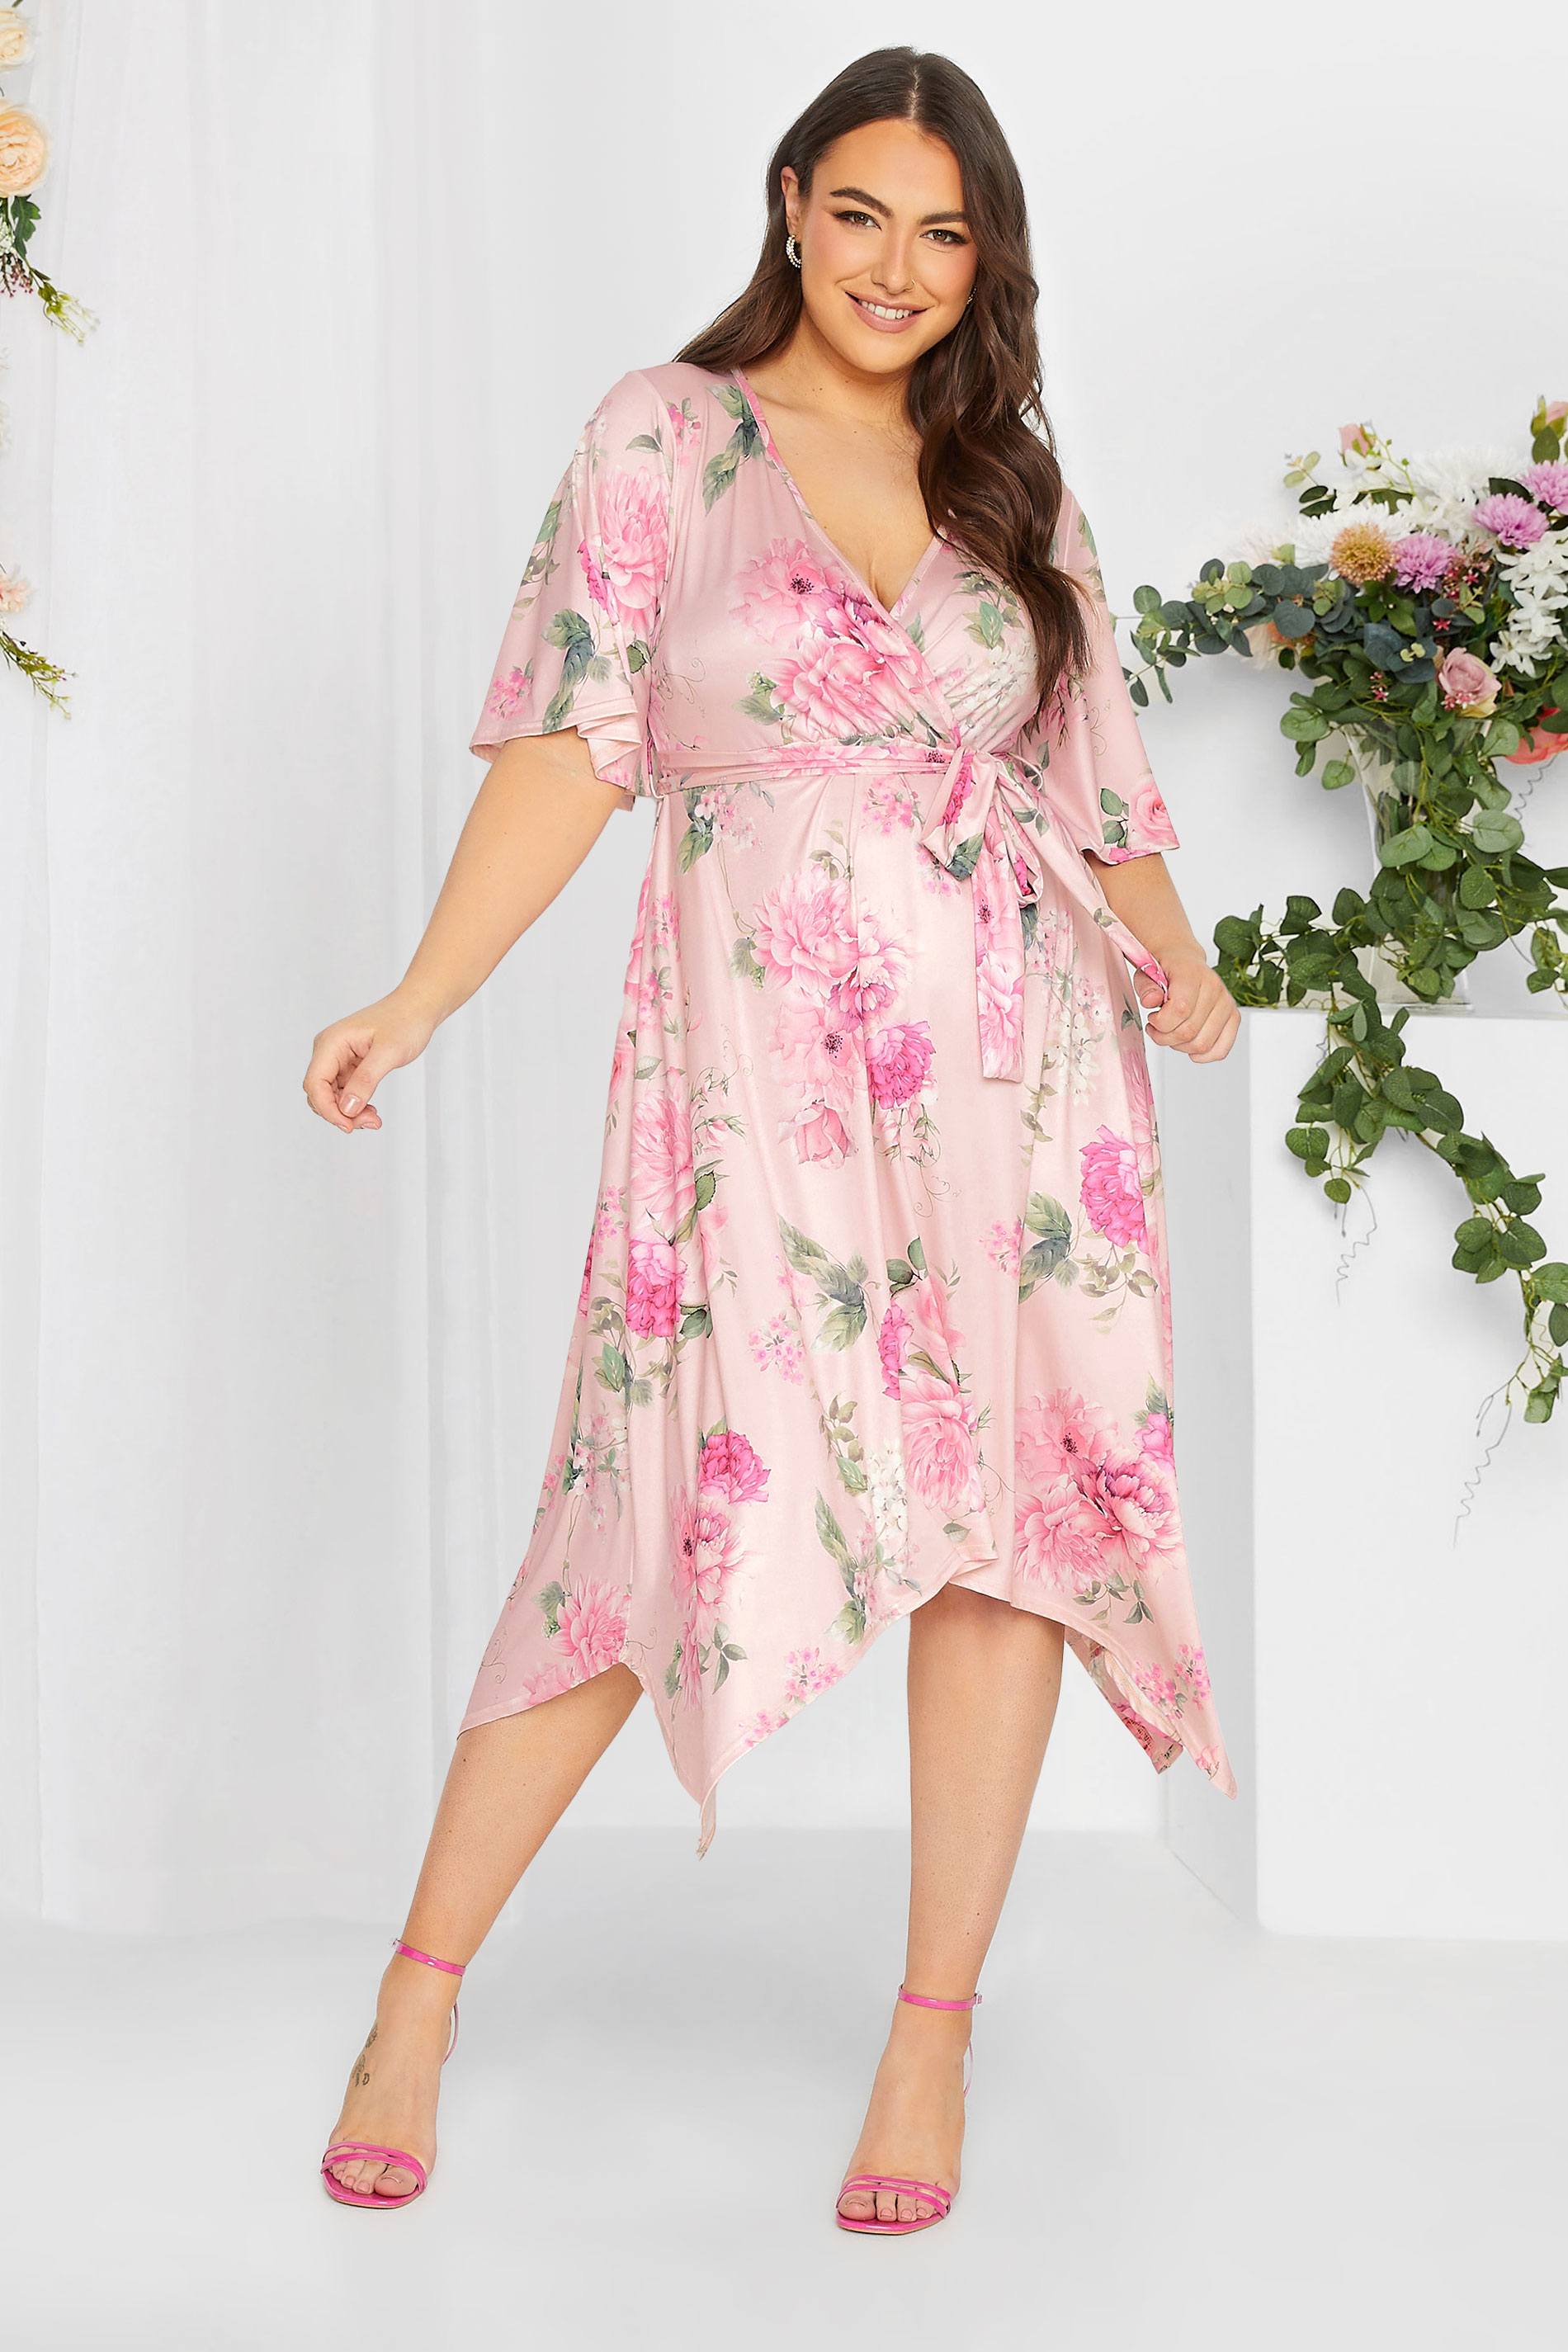 YOURS LONDON Curve Plus Size Light Pink Floral Hanky Hem Dress | Yours Clothing  1